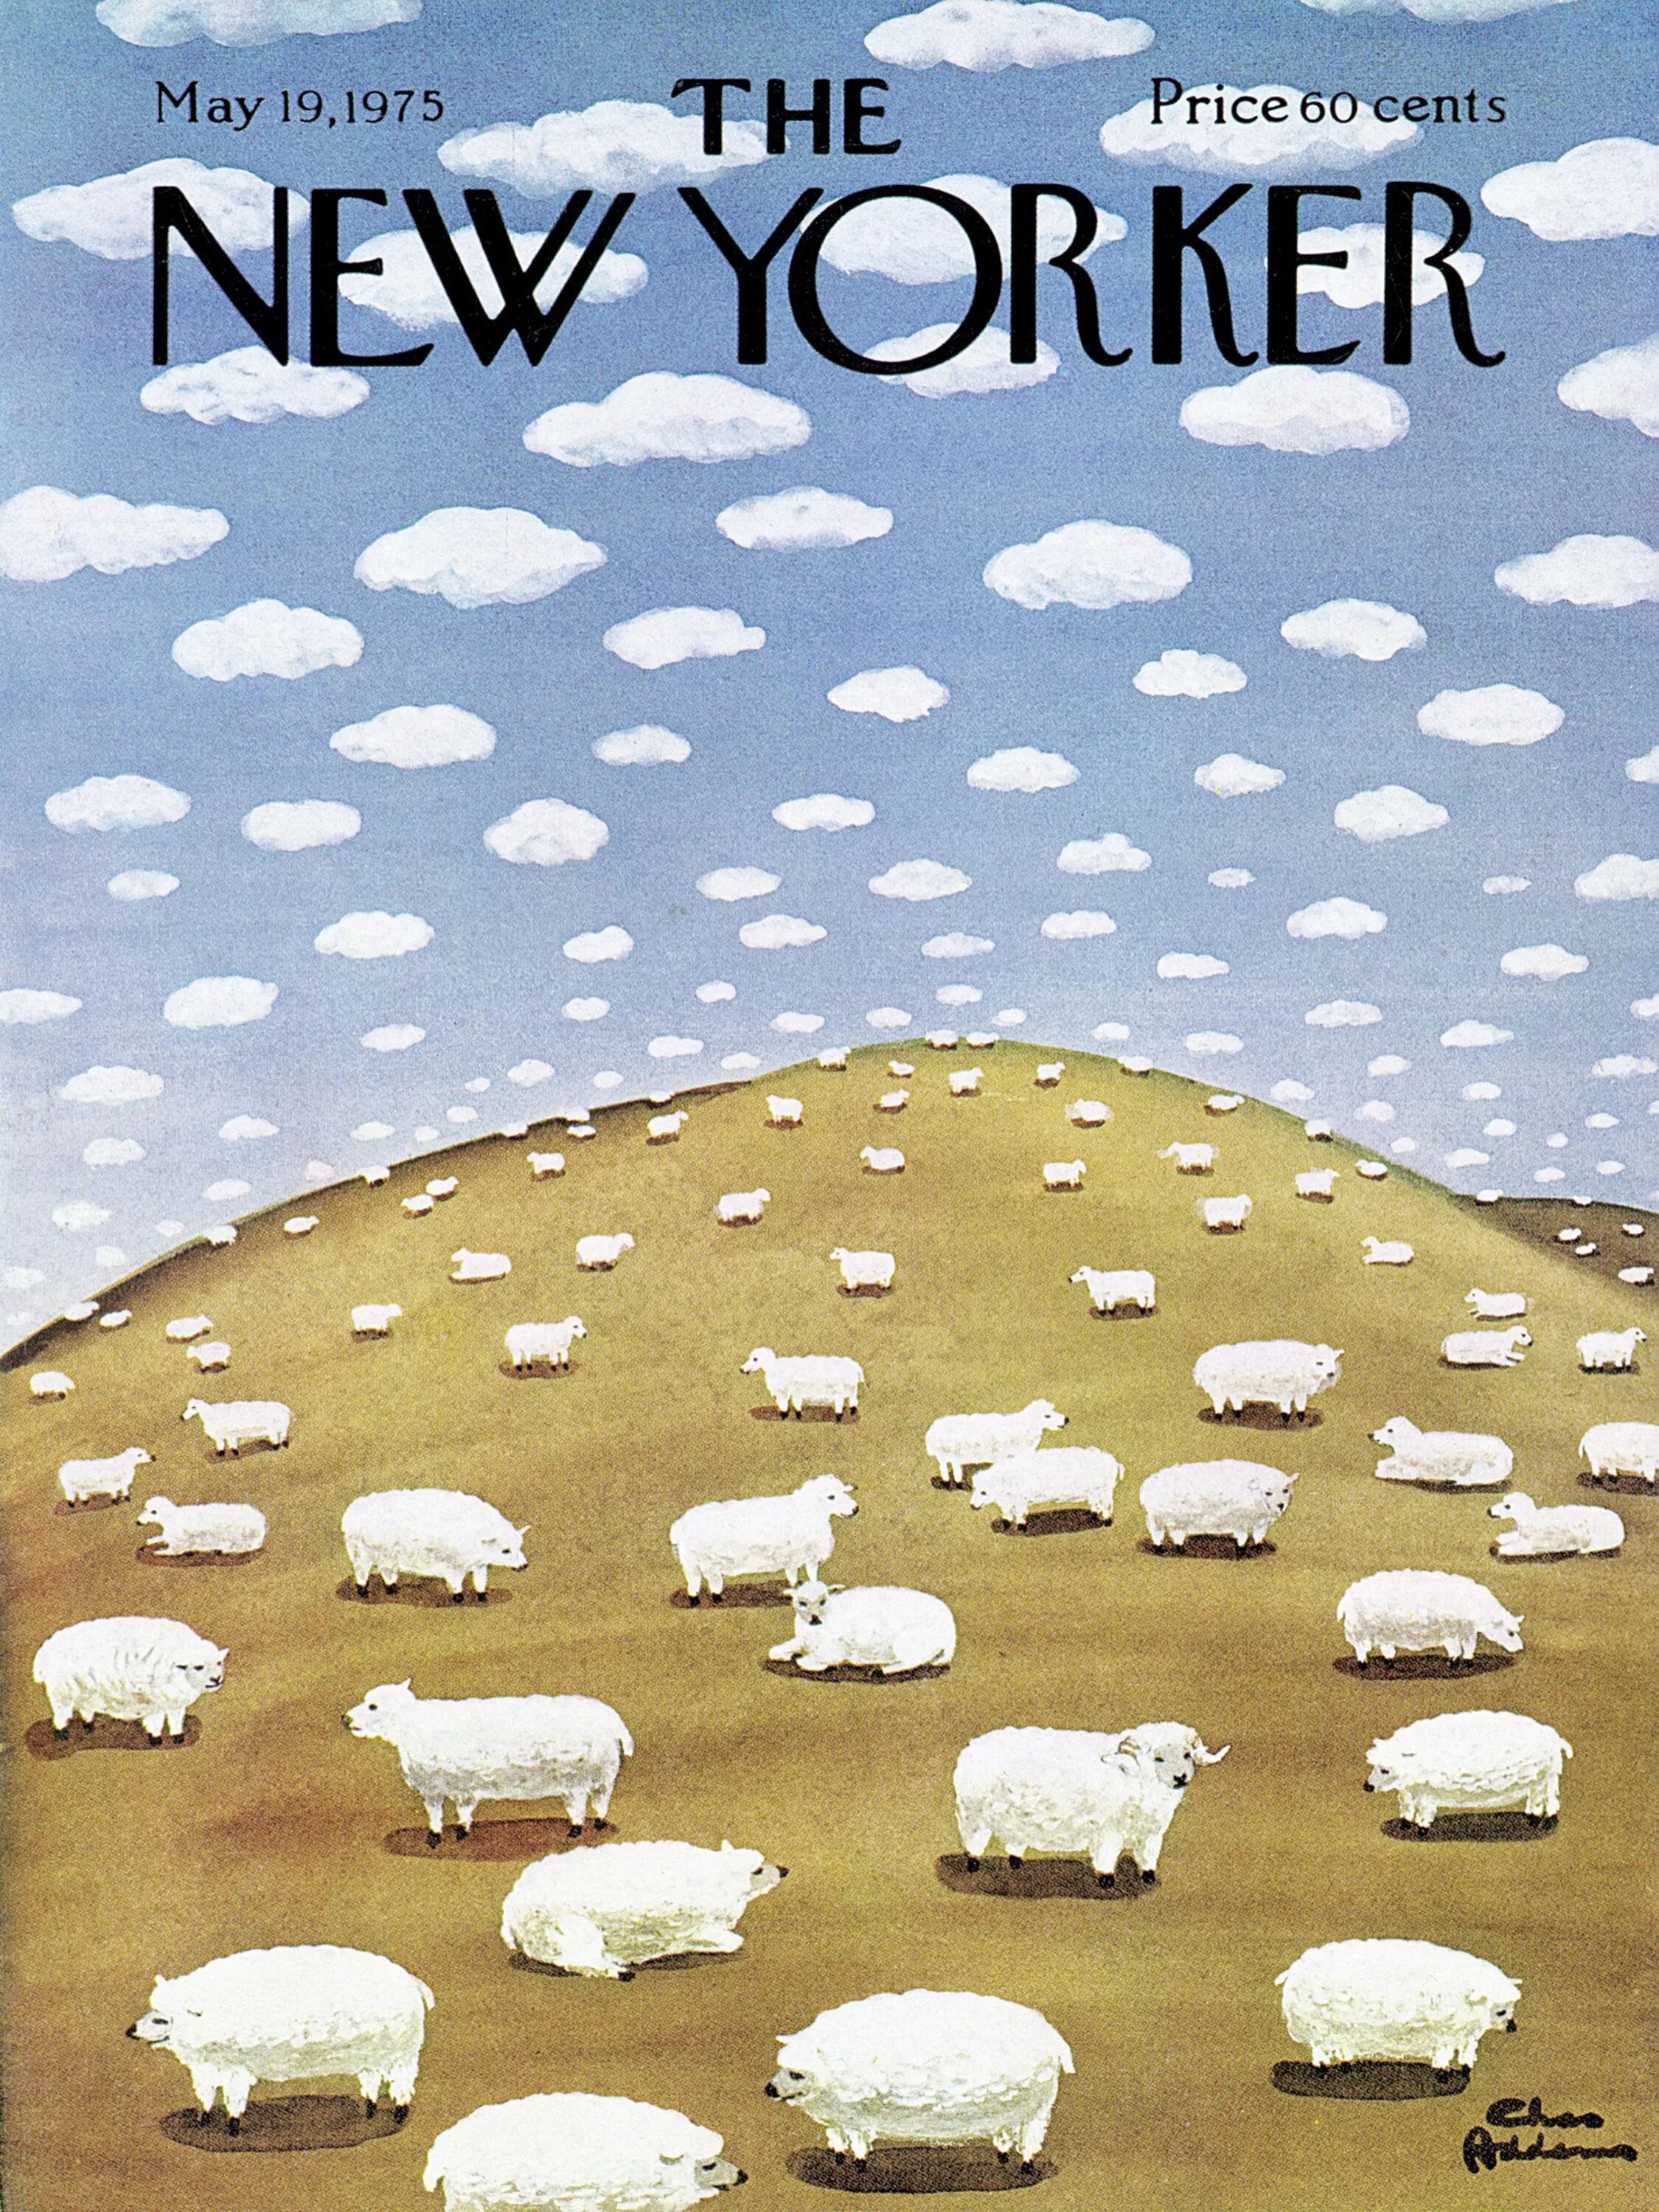 The New Yorker Magazine обложки. Постер New Yorker. Обложка the New Yorker 1996 May. Постеры обложки журналов New Yorker. Журнал new yorker